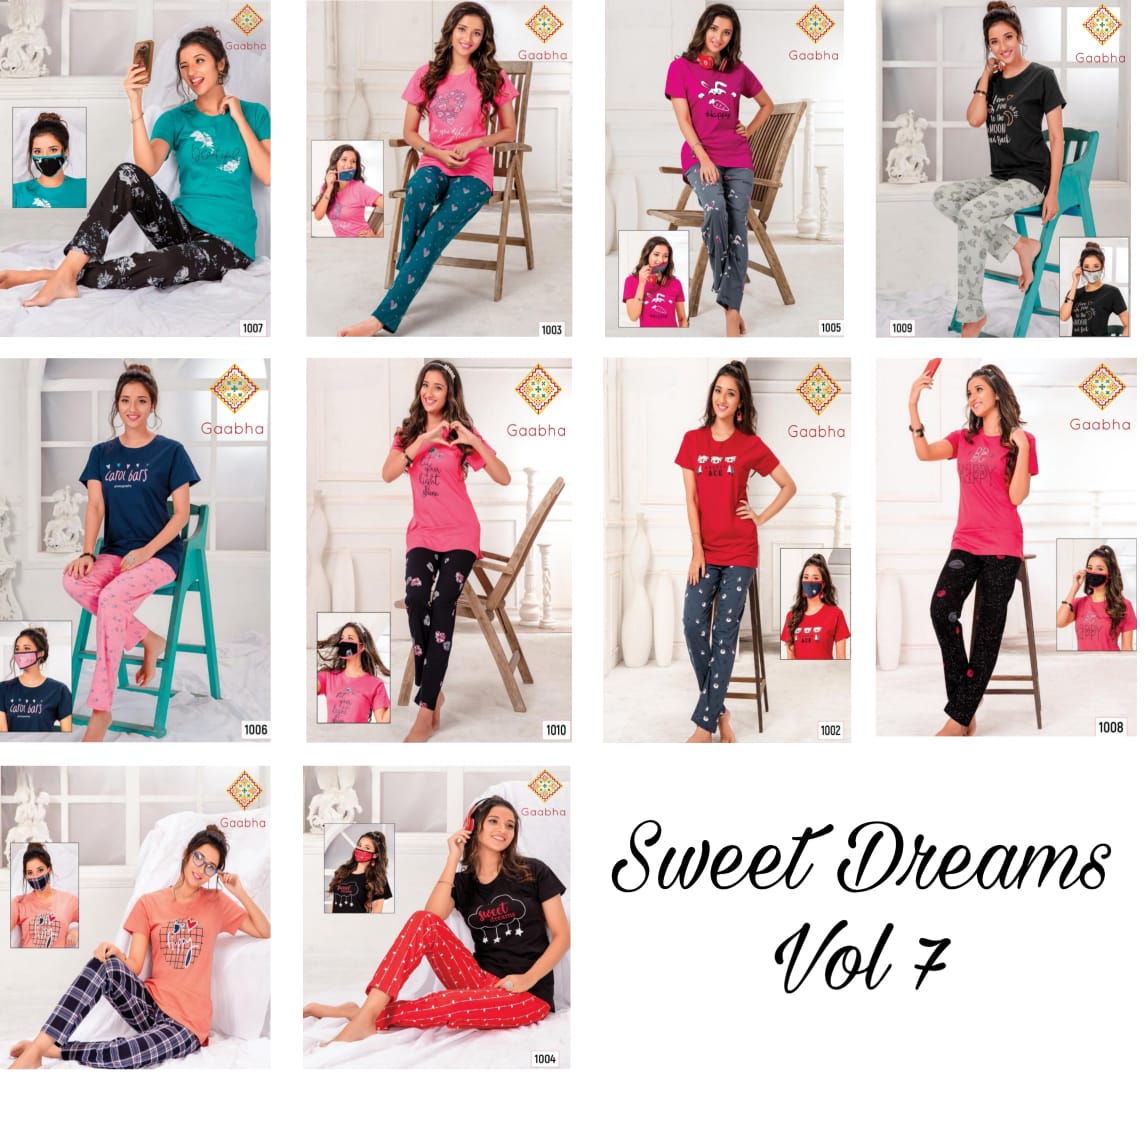 Gaabha Sweet Dreams Vol 7 Premium Lounge wear Collection